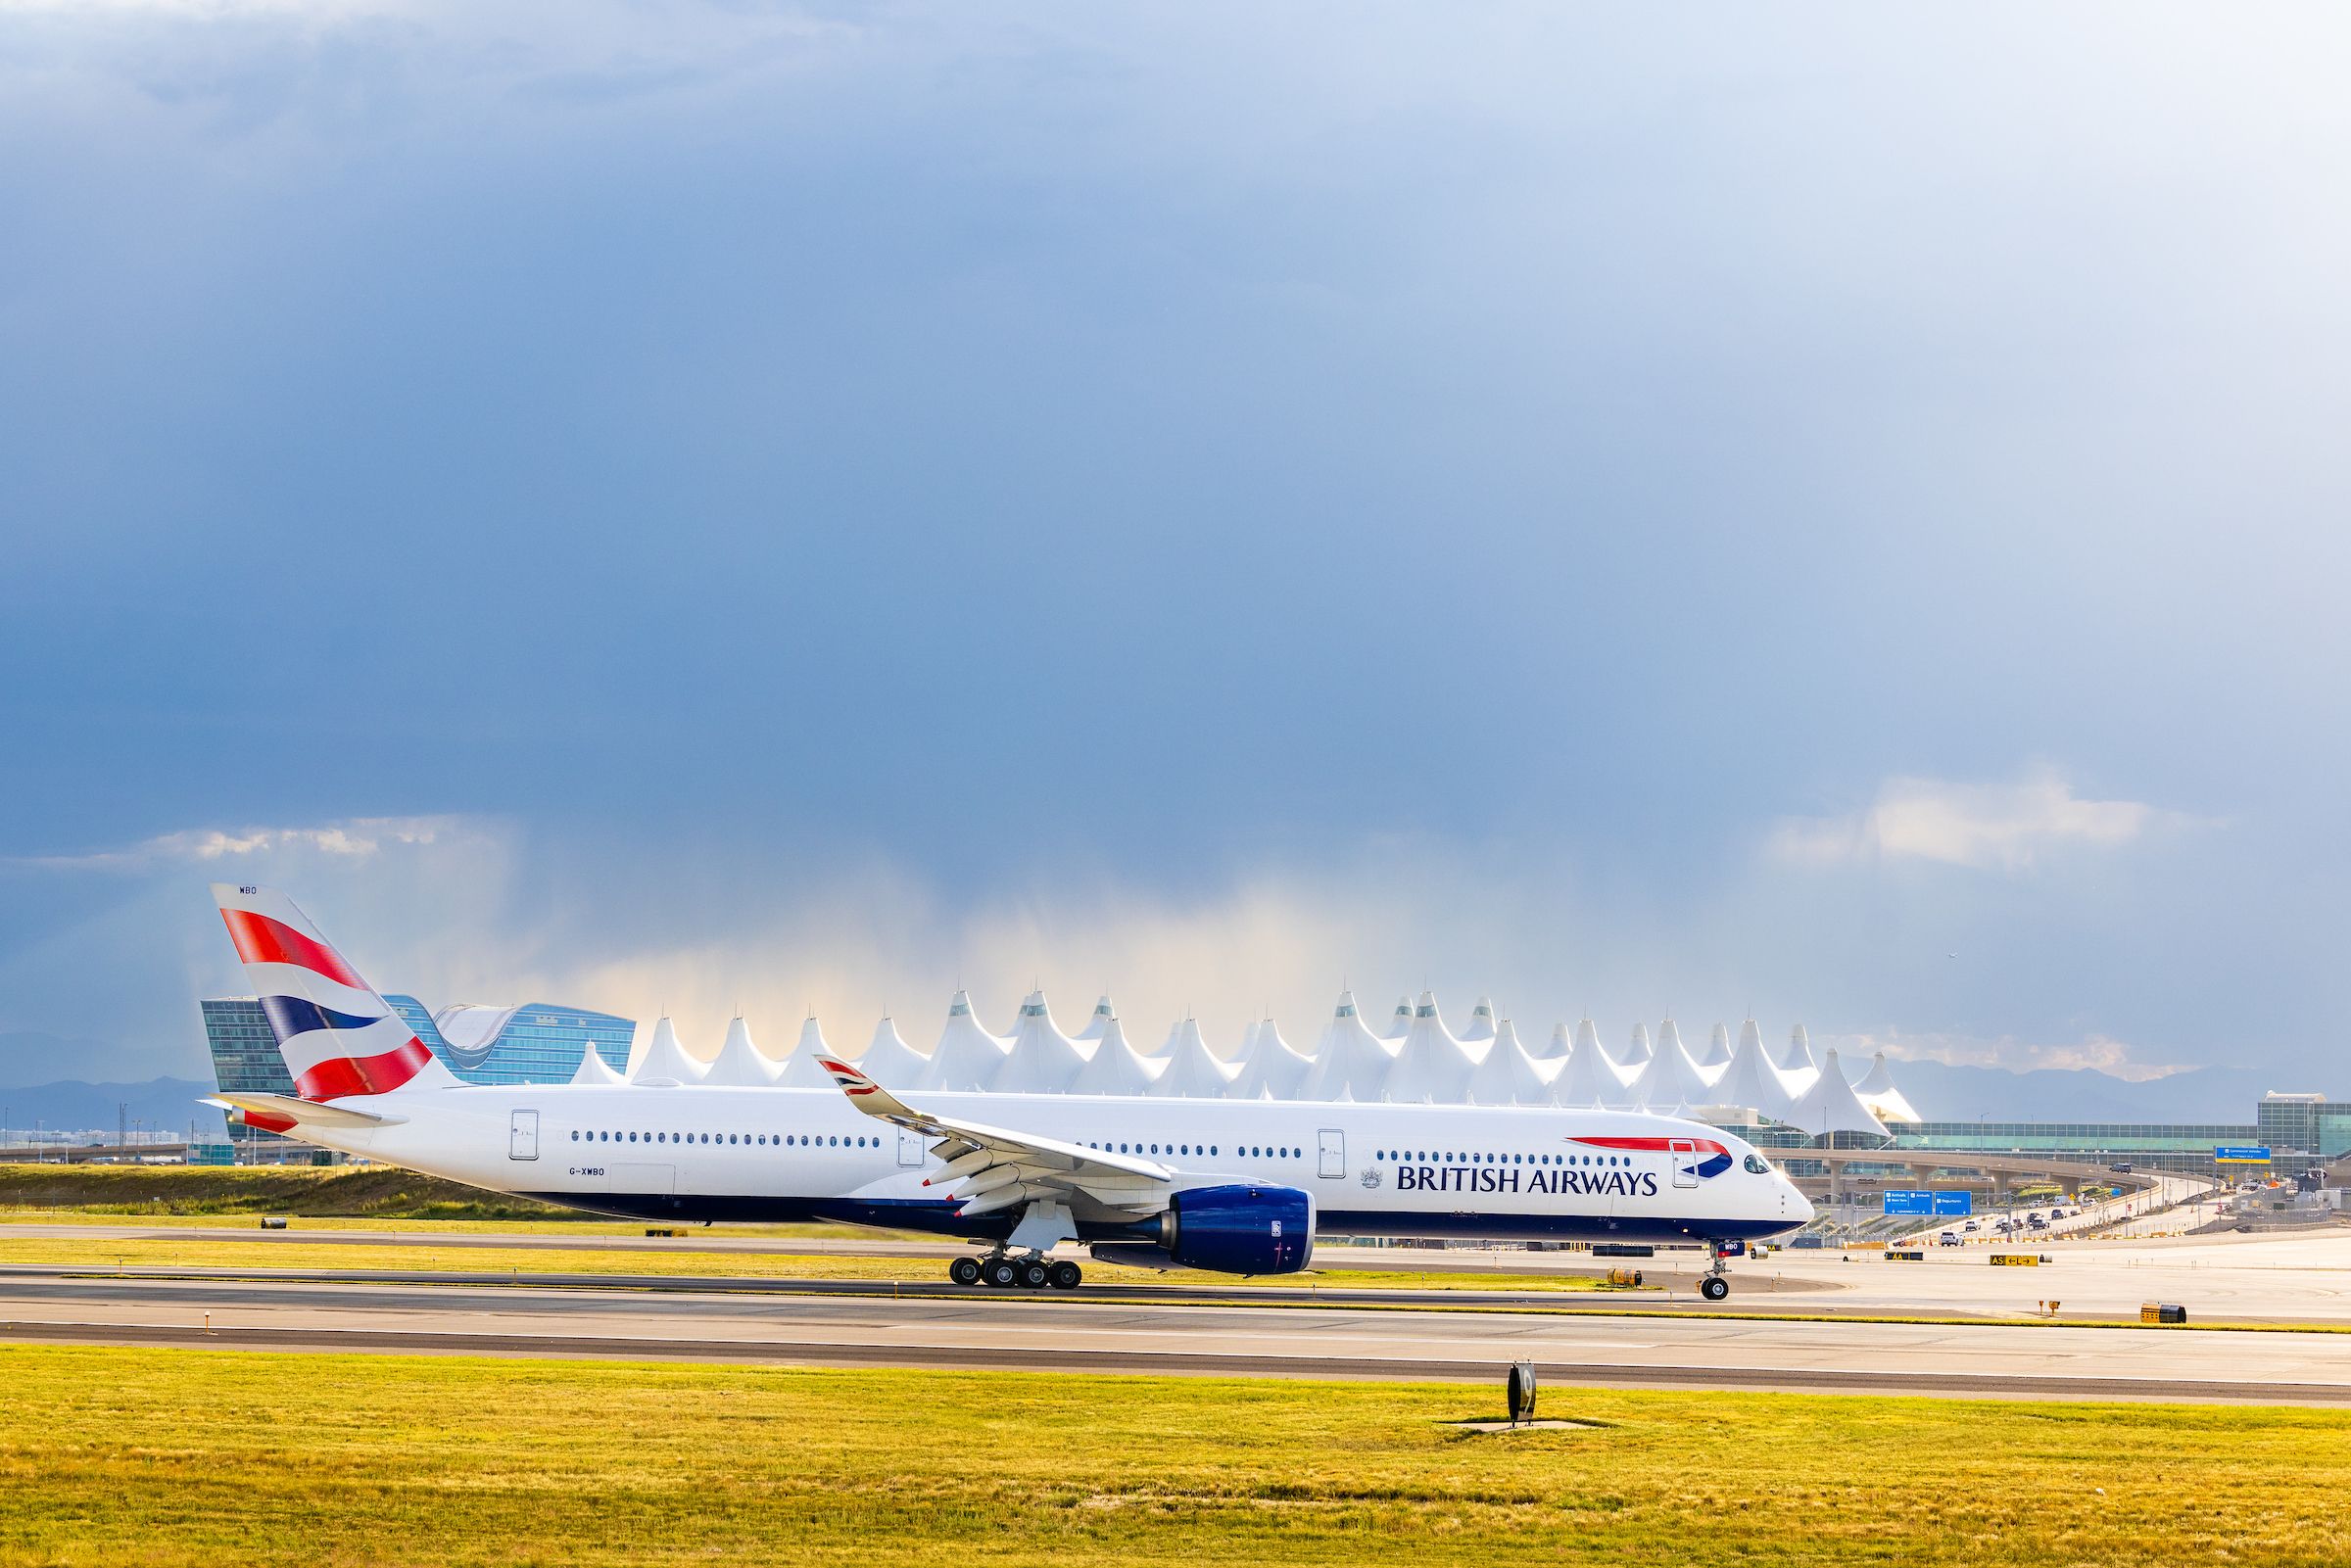 British Airways Airbus A350 at Denver International Airport.